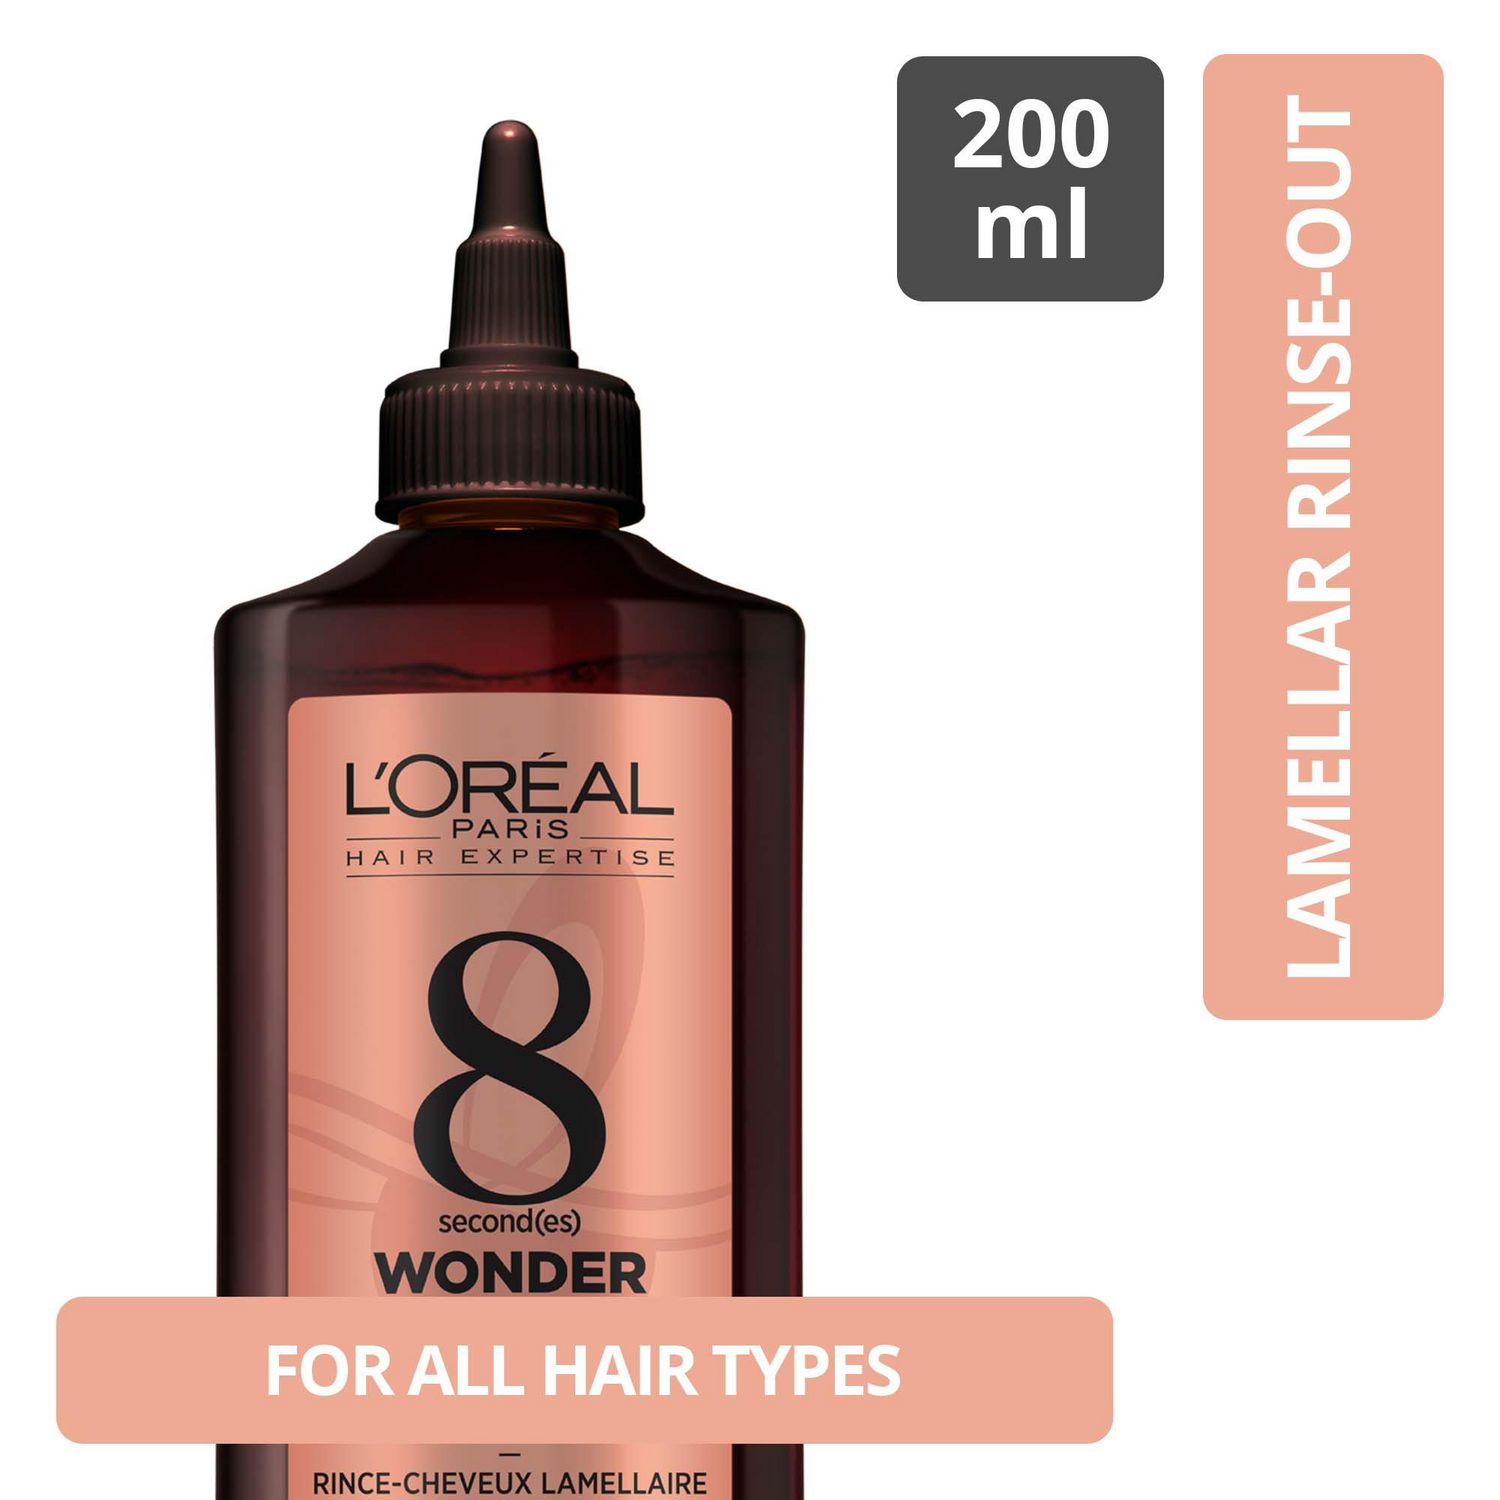 L'Oreal Paris Hair Expertise 8-second Wonder Water Lamellar Rinse-out  Treatment, 200ml | Walmart Canada